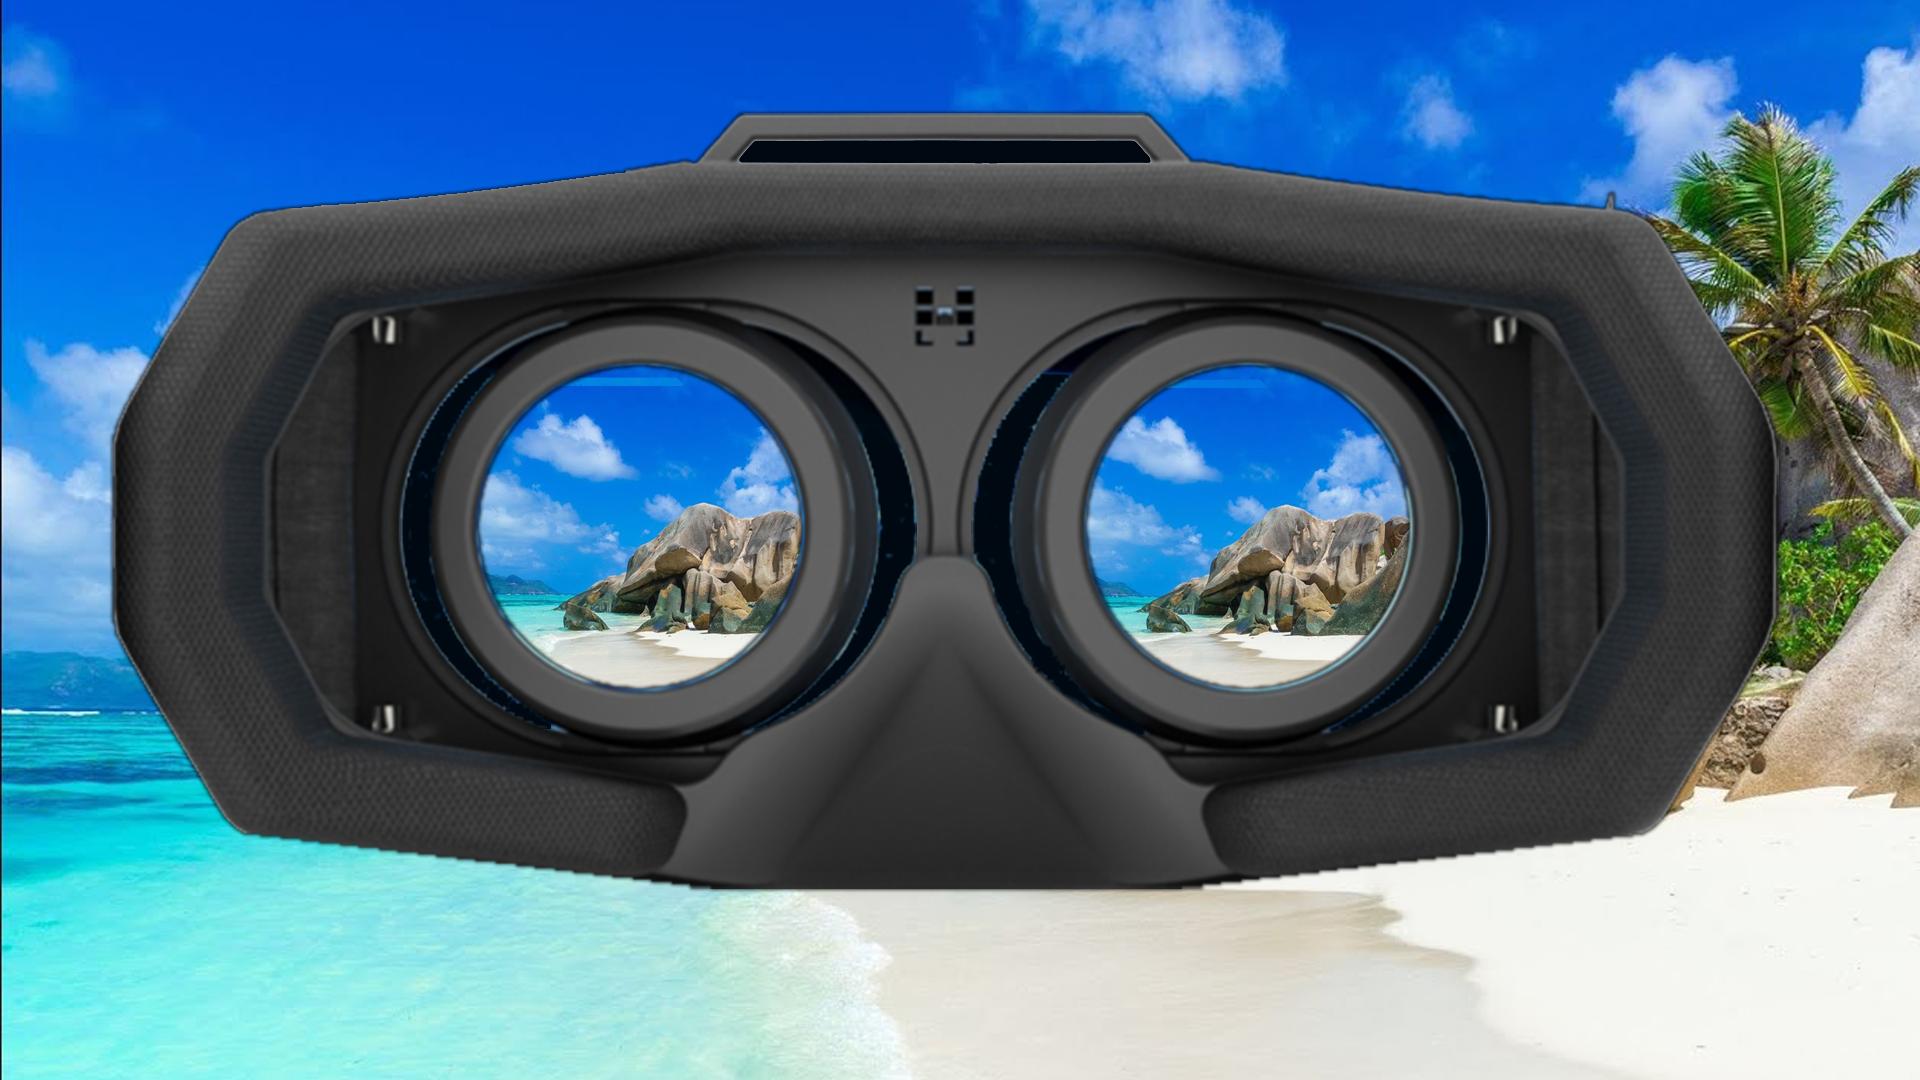 Vr видео андроид. VR видео. 3d VR 360. Видео для ВР очков 360. VR COOLPAINTR VR Deluxe Edition.